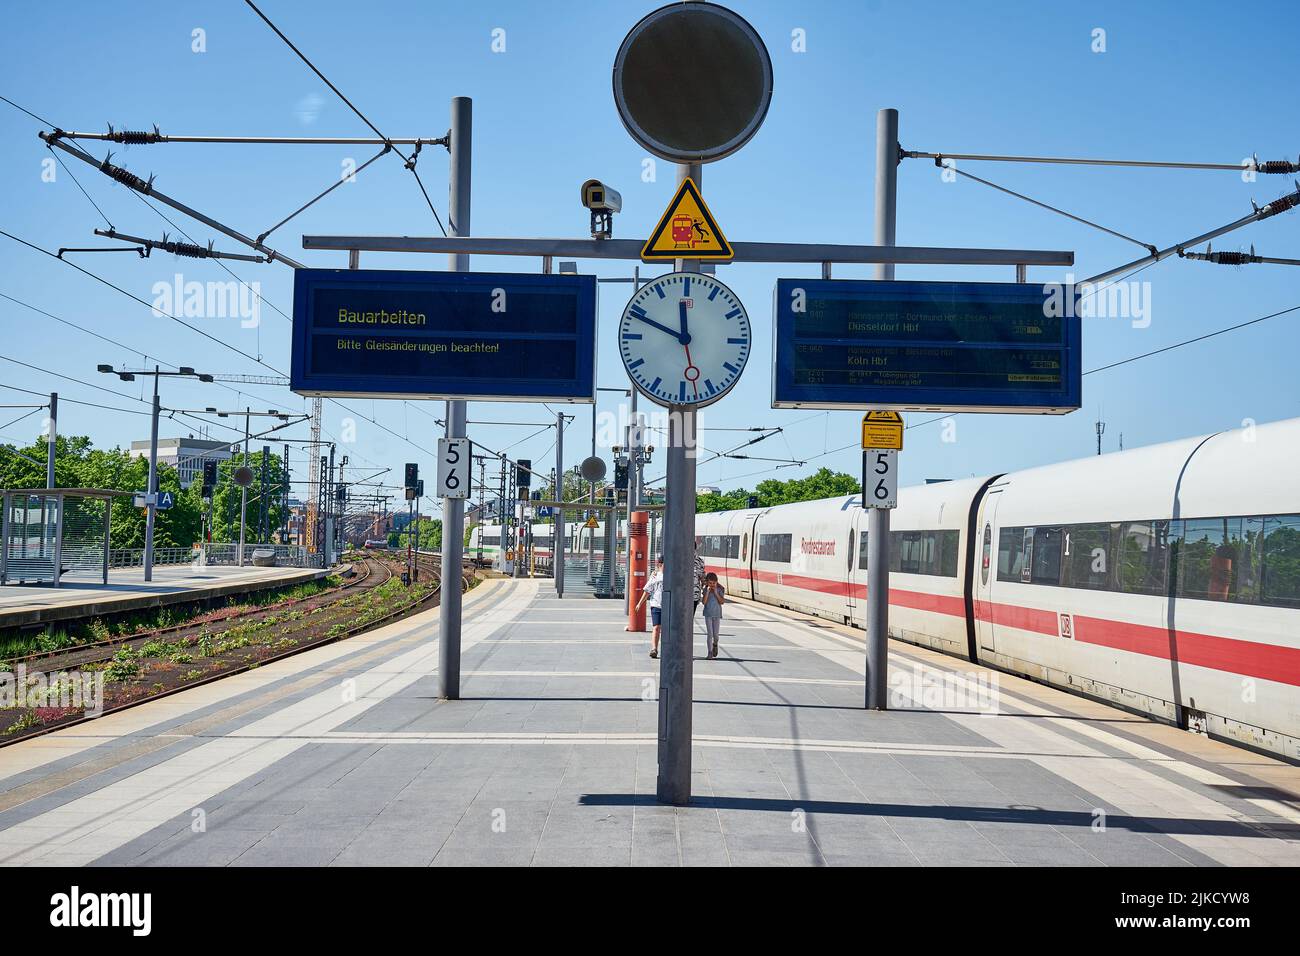 Bahnsteig, Schild Bauarbeiten, ICE, Hauptbahnhof, Berlin, Deutschland Stock Photo